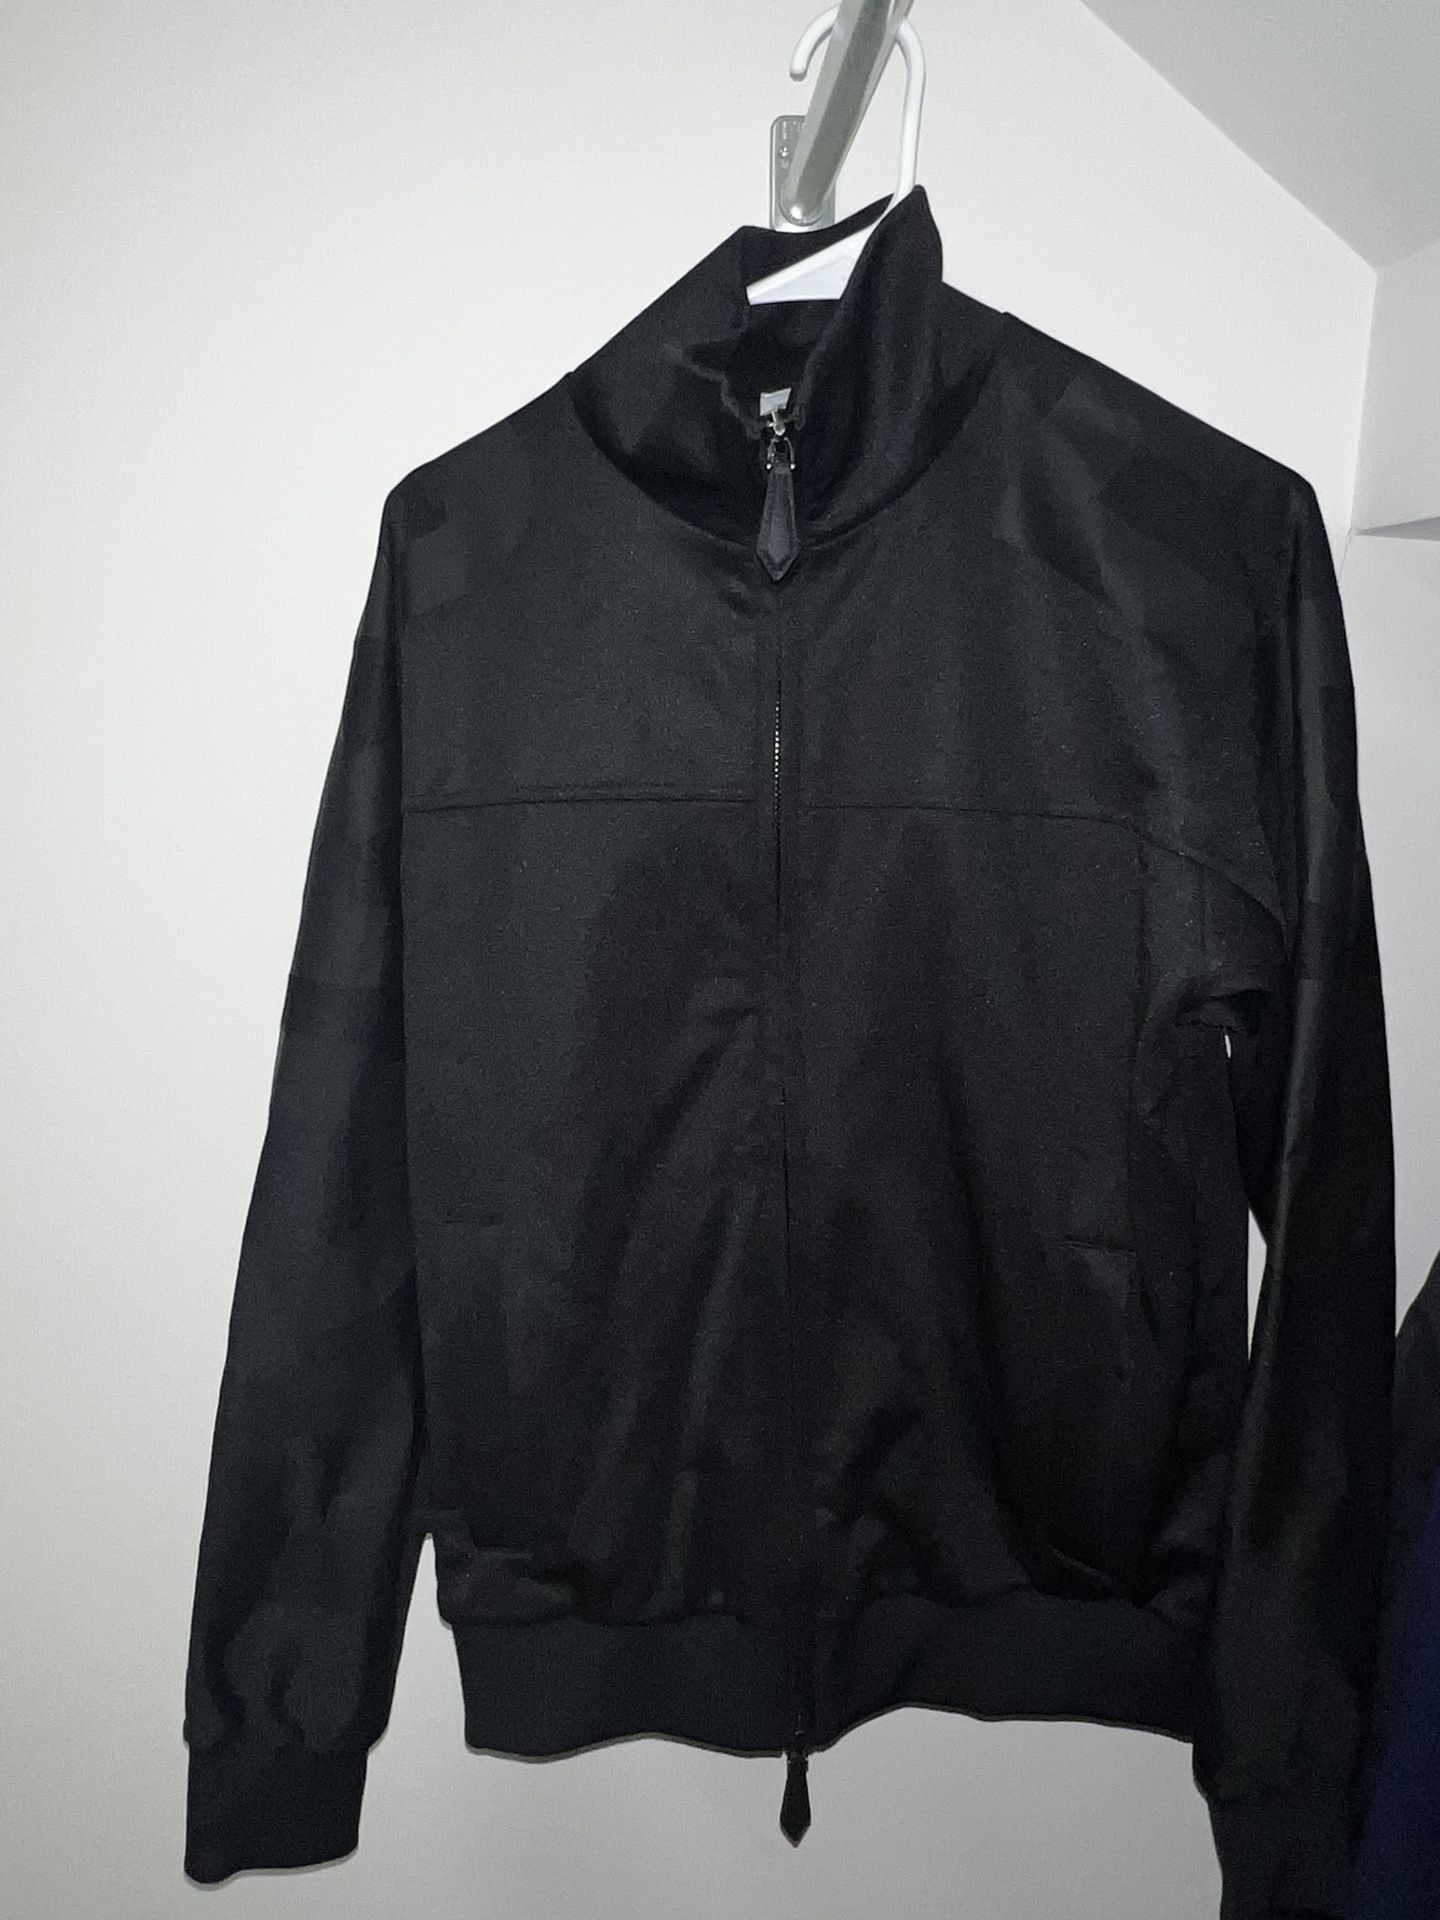 Sleek Sophistication: Burberry Black Men's Jacket